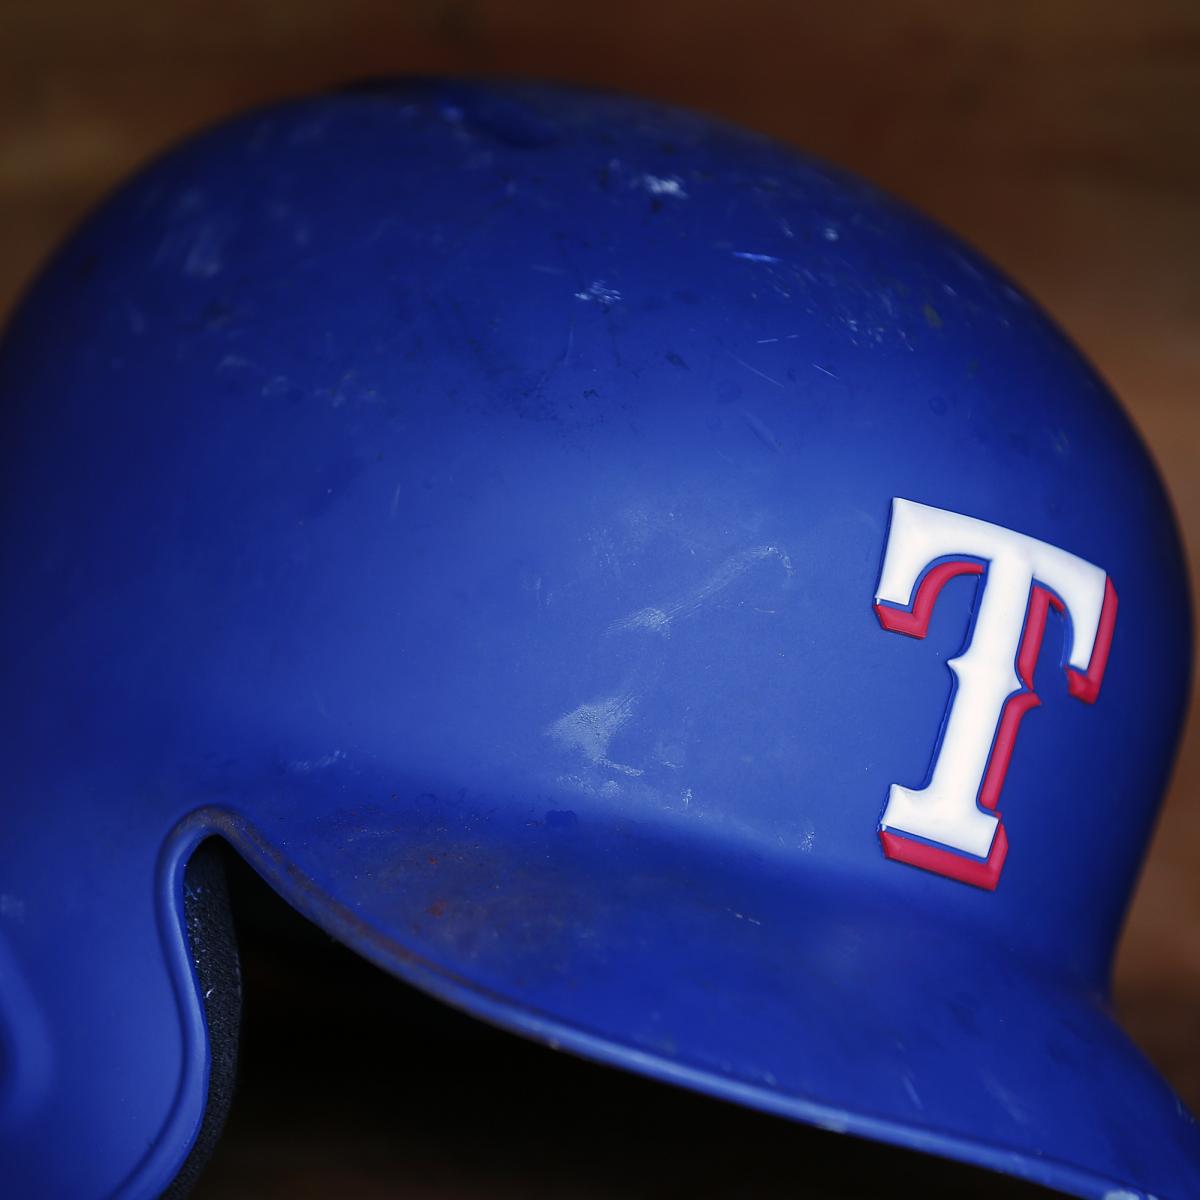 Texas Rangers Have No Plans to Swap Nickname Despite Public Scrutiny